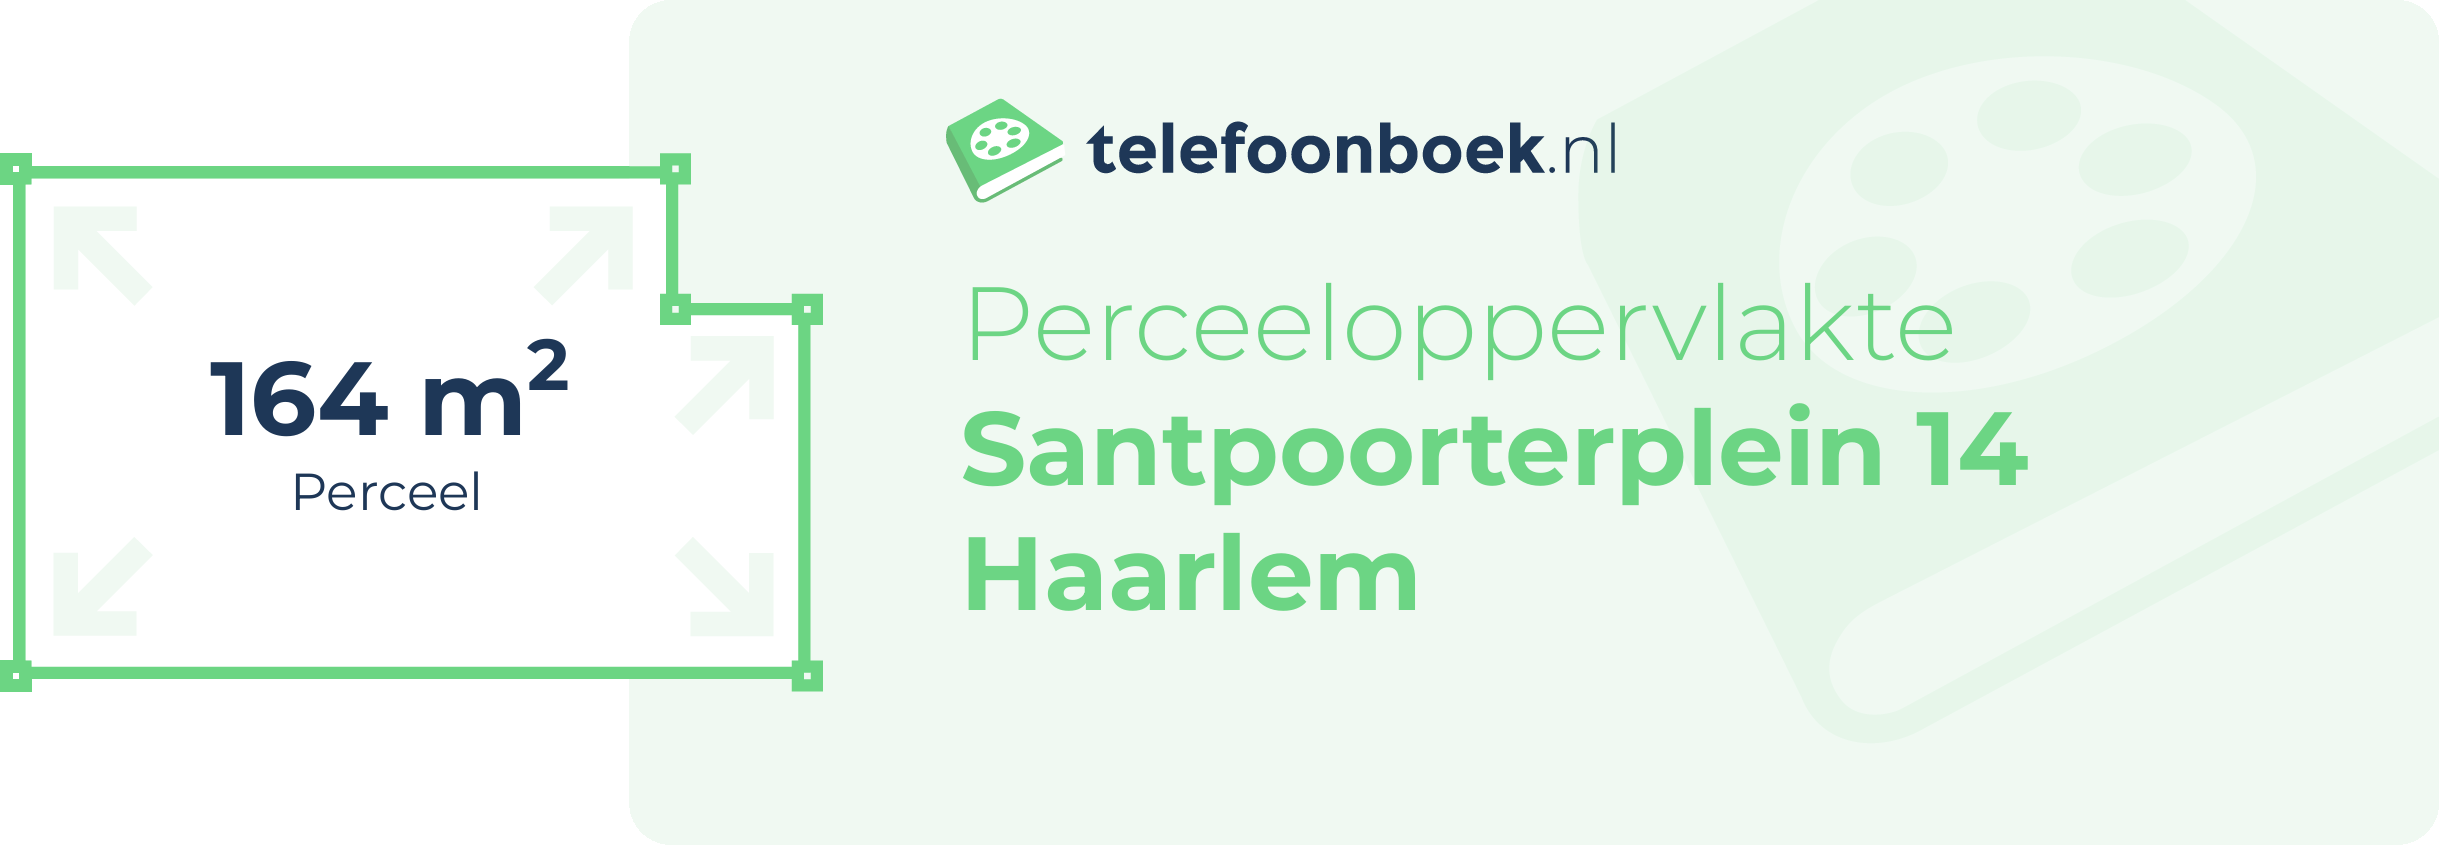 Perceeloppervlakte Santpoorterplein 14 Haarlem